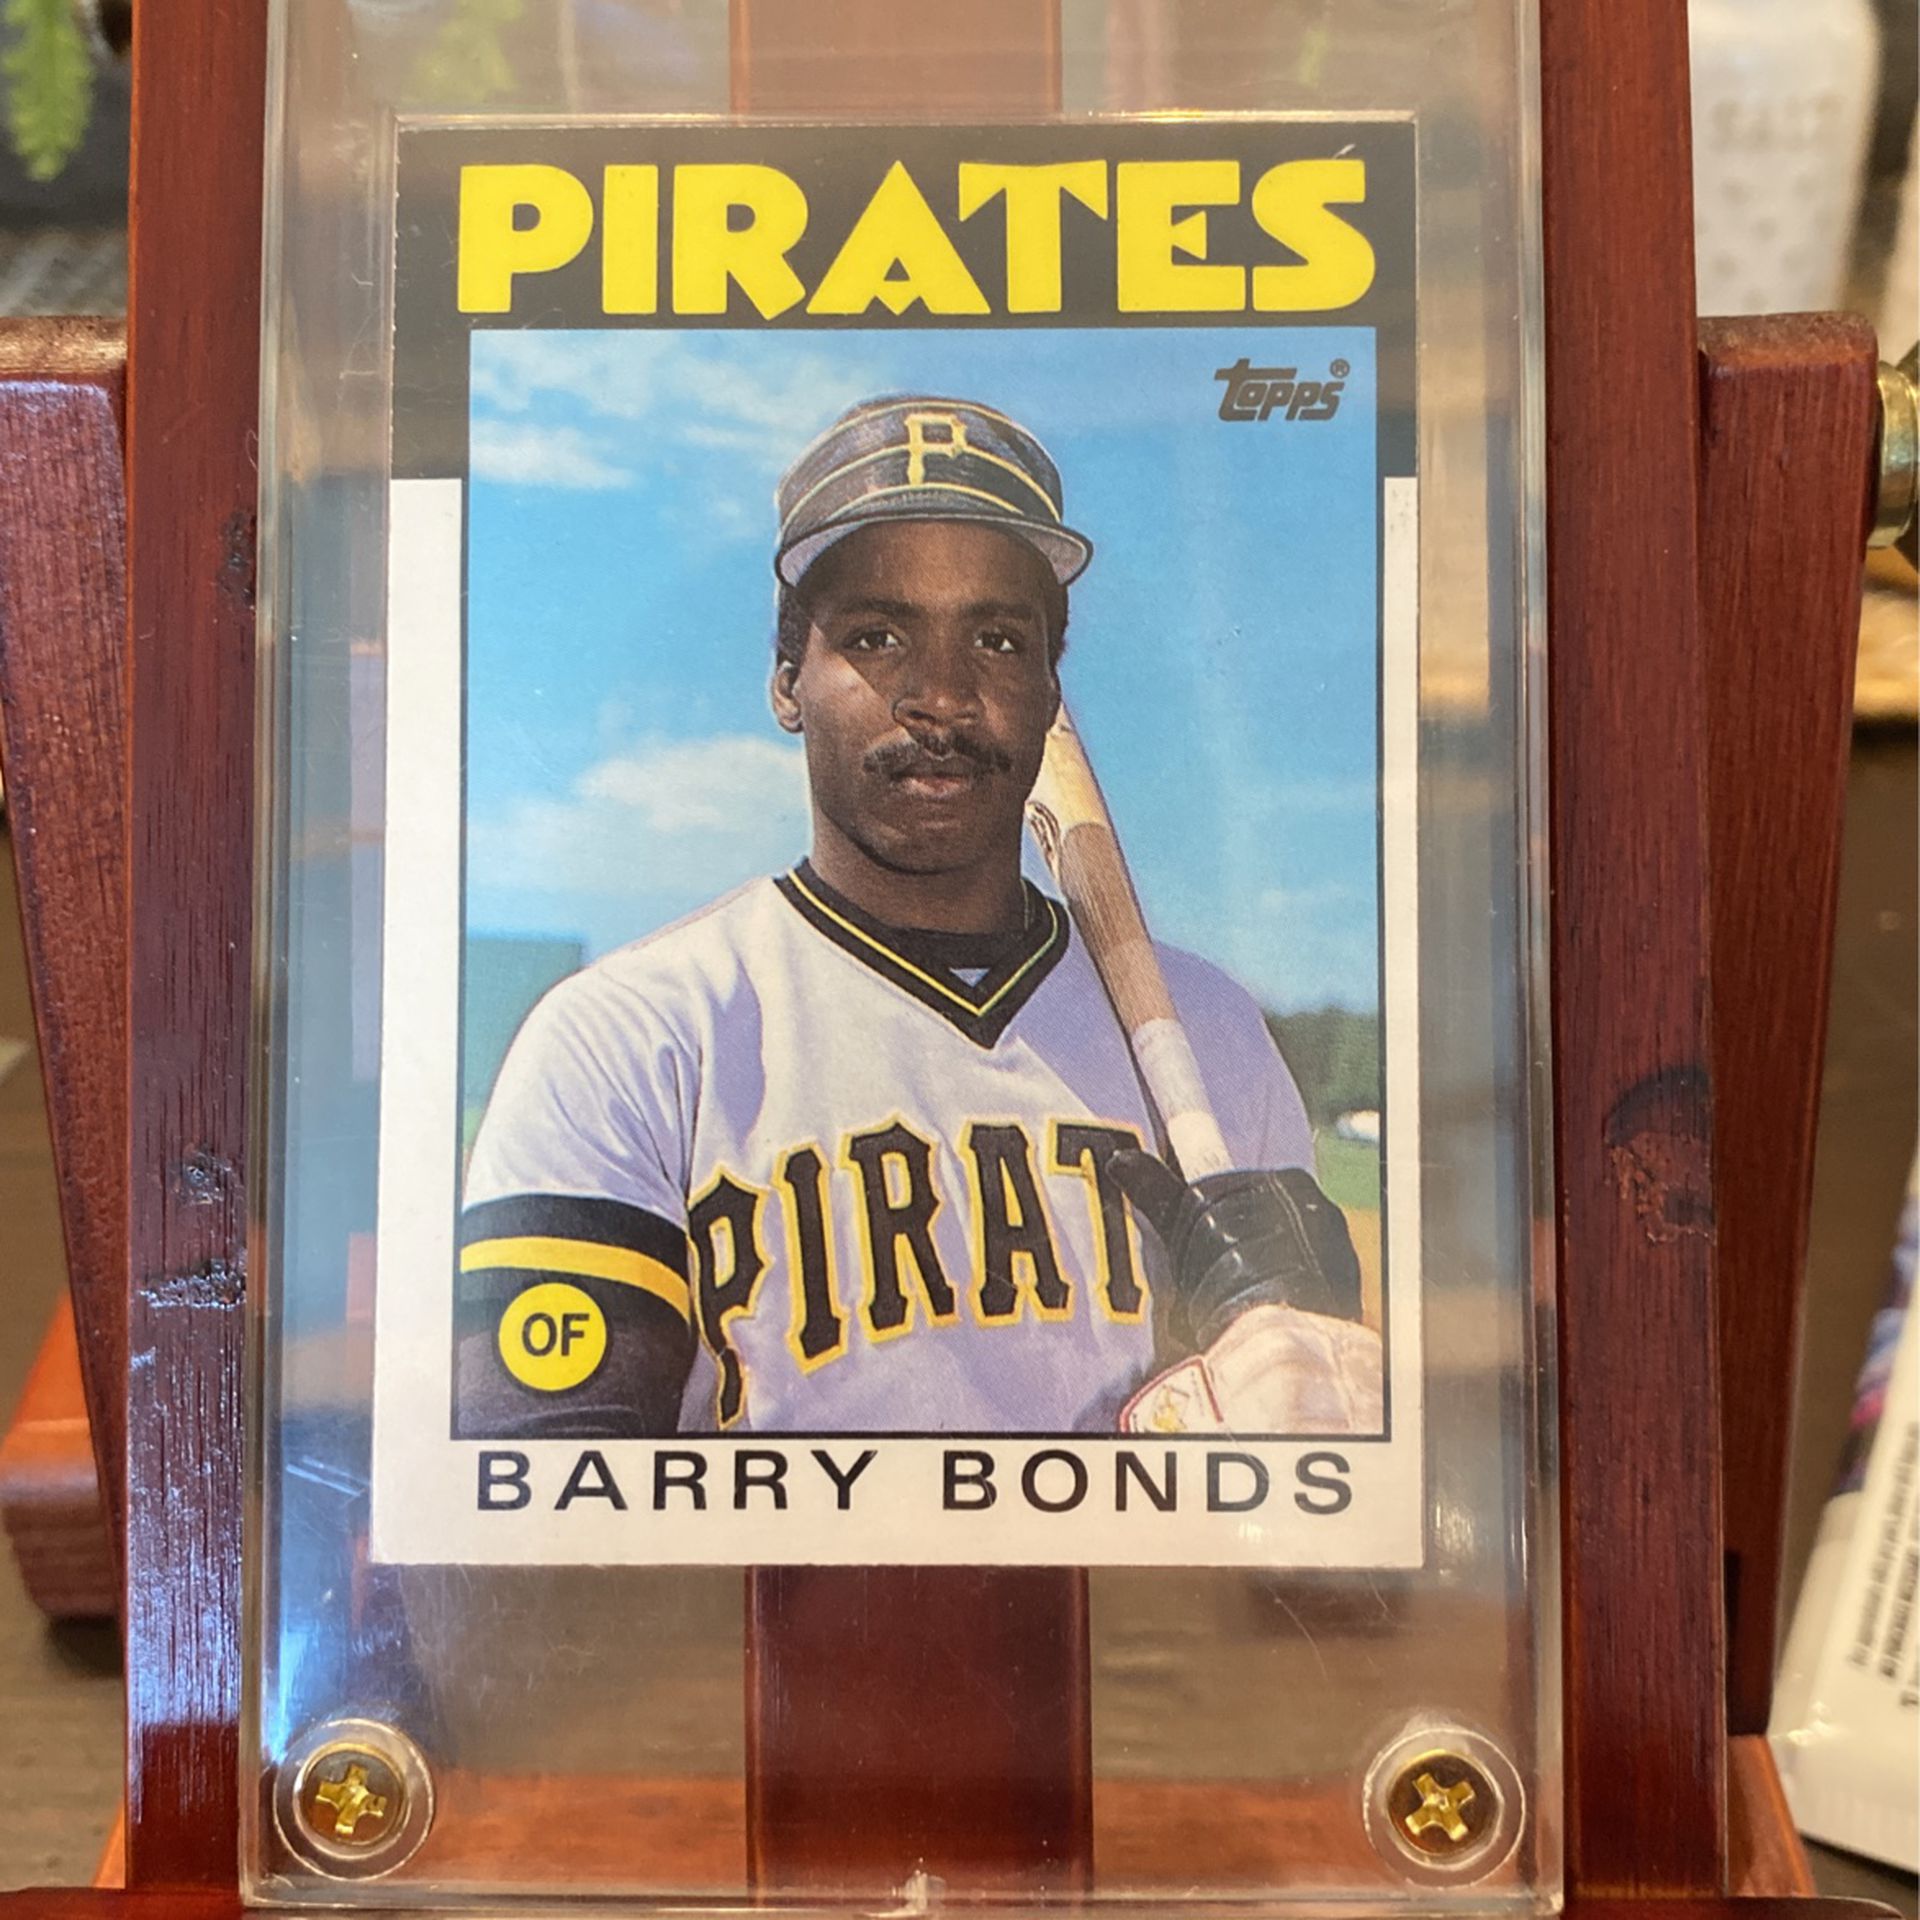 Barry bonds Baseball Card